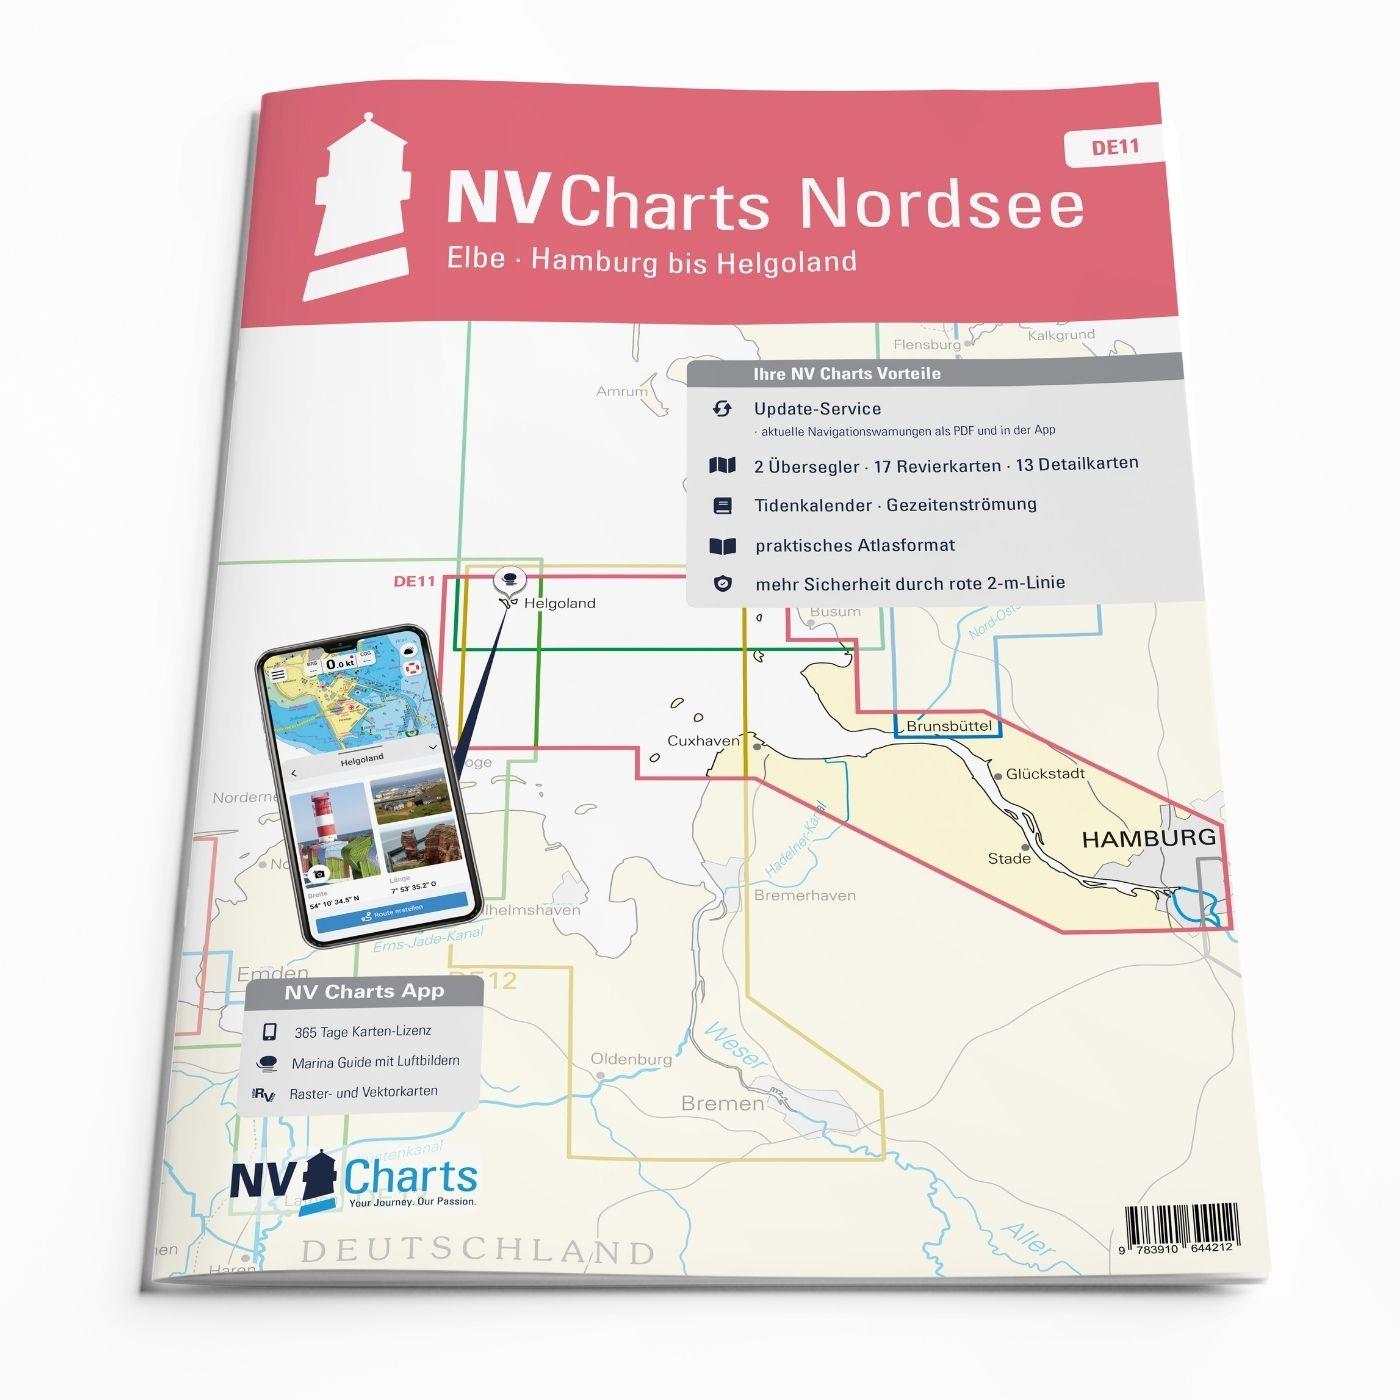 Subscription - NV Charts Nordsee DE11 - Elbe, Hamburg bis Helgoland